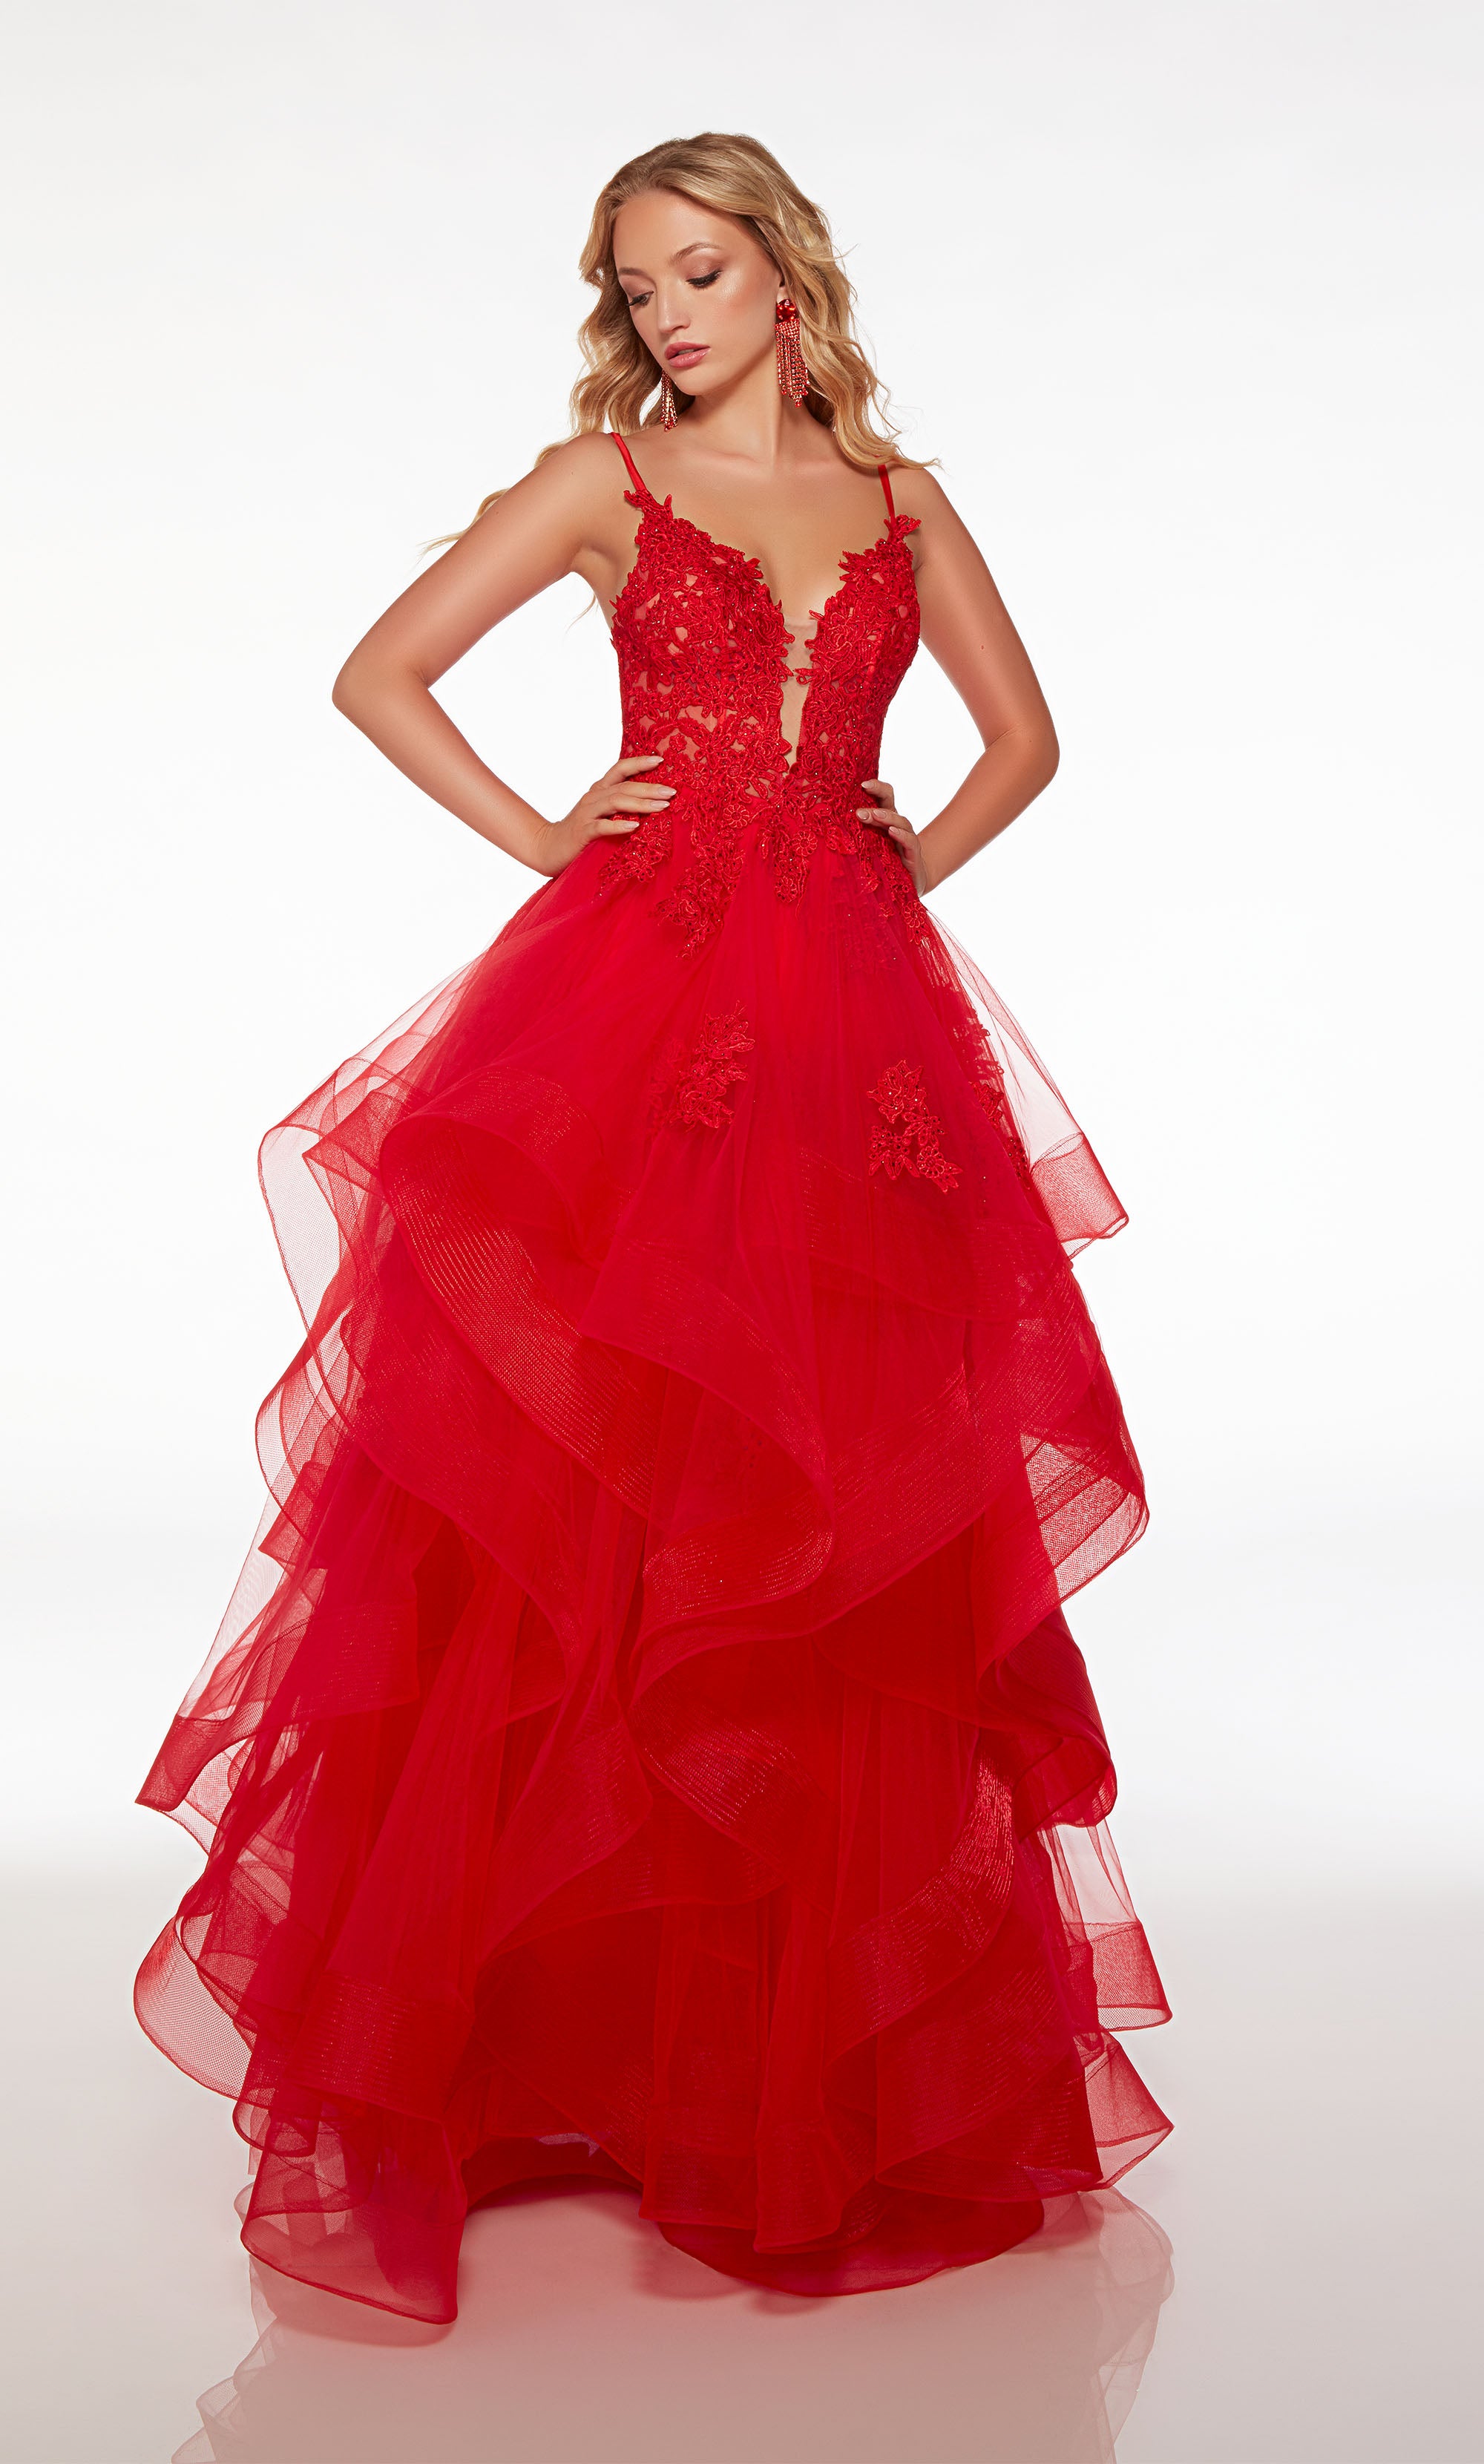 Zapaka Prom Dress Red A Line Spaghetti Straps Beaded Long Evening Dress  With Pearls – ZAPAKA UK